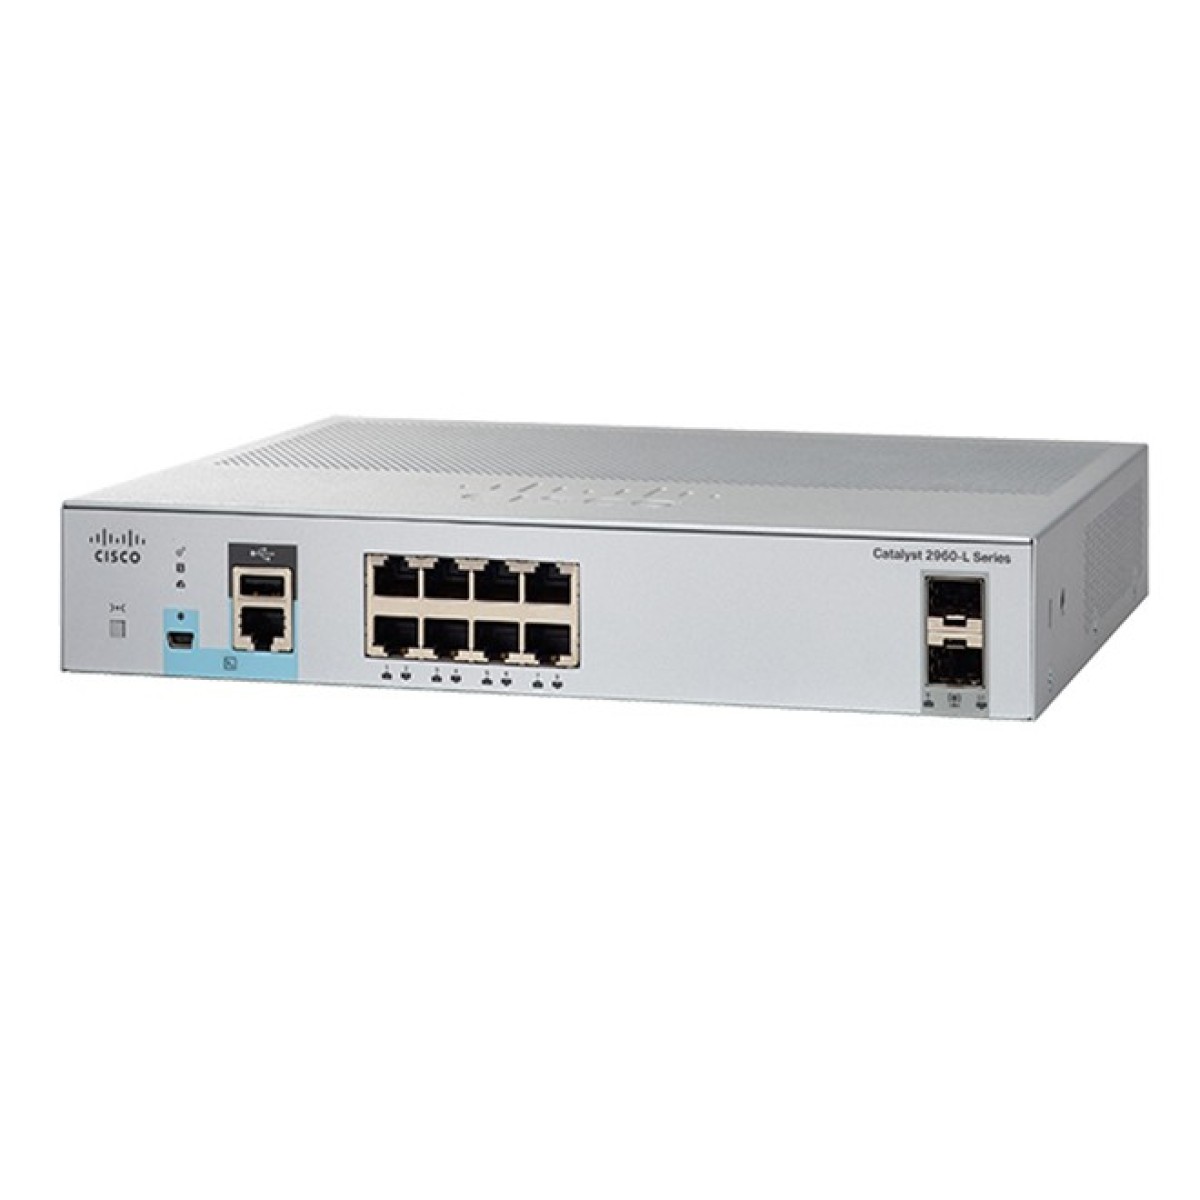 Коммутатор Cisco Catalyst 2960L 8 port GigE, 2 x 1G SFP, LAN Lite 98_98.jpg